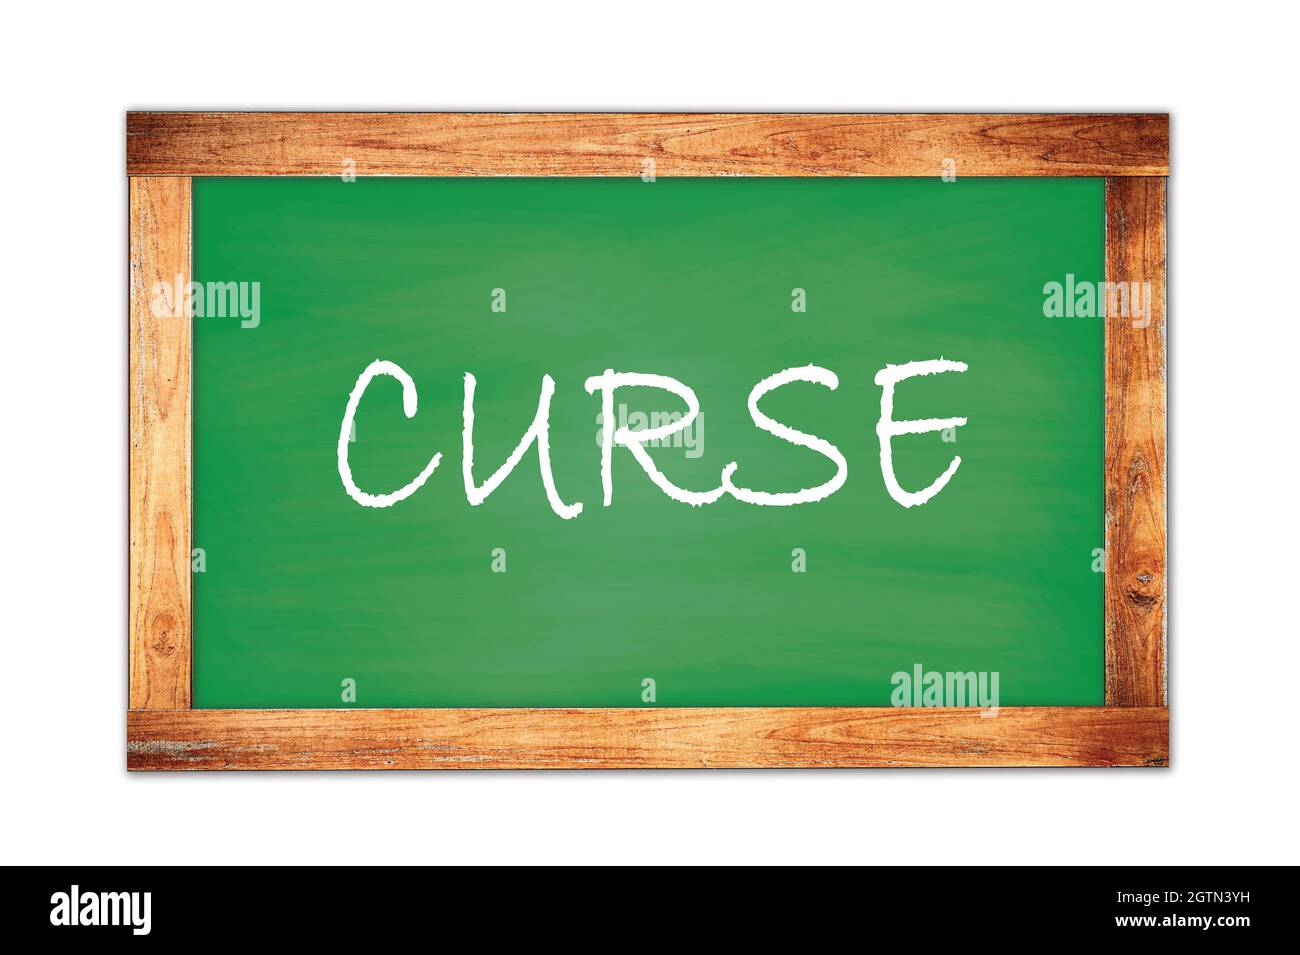 Cursing The Curse Of Cursive